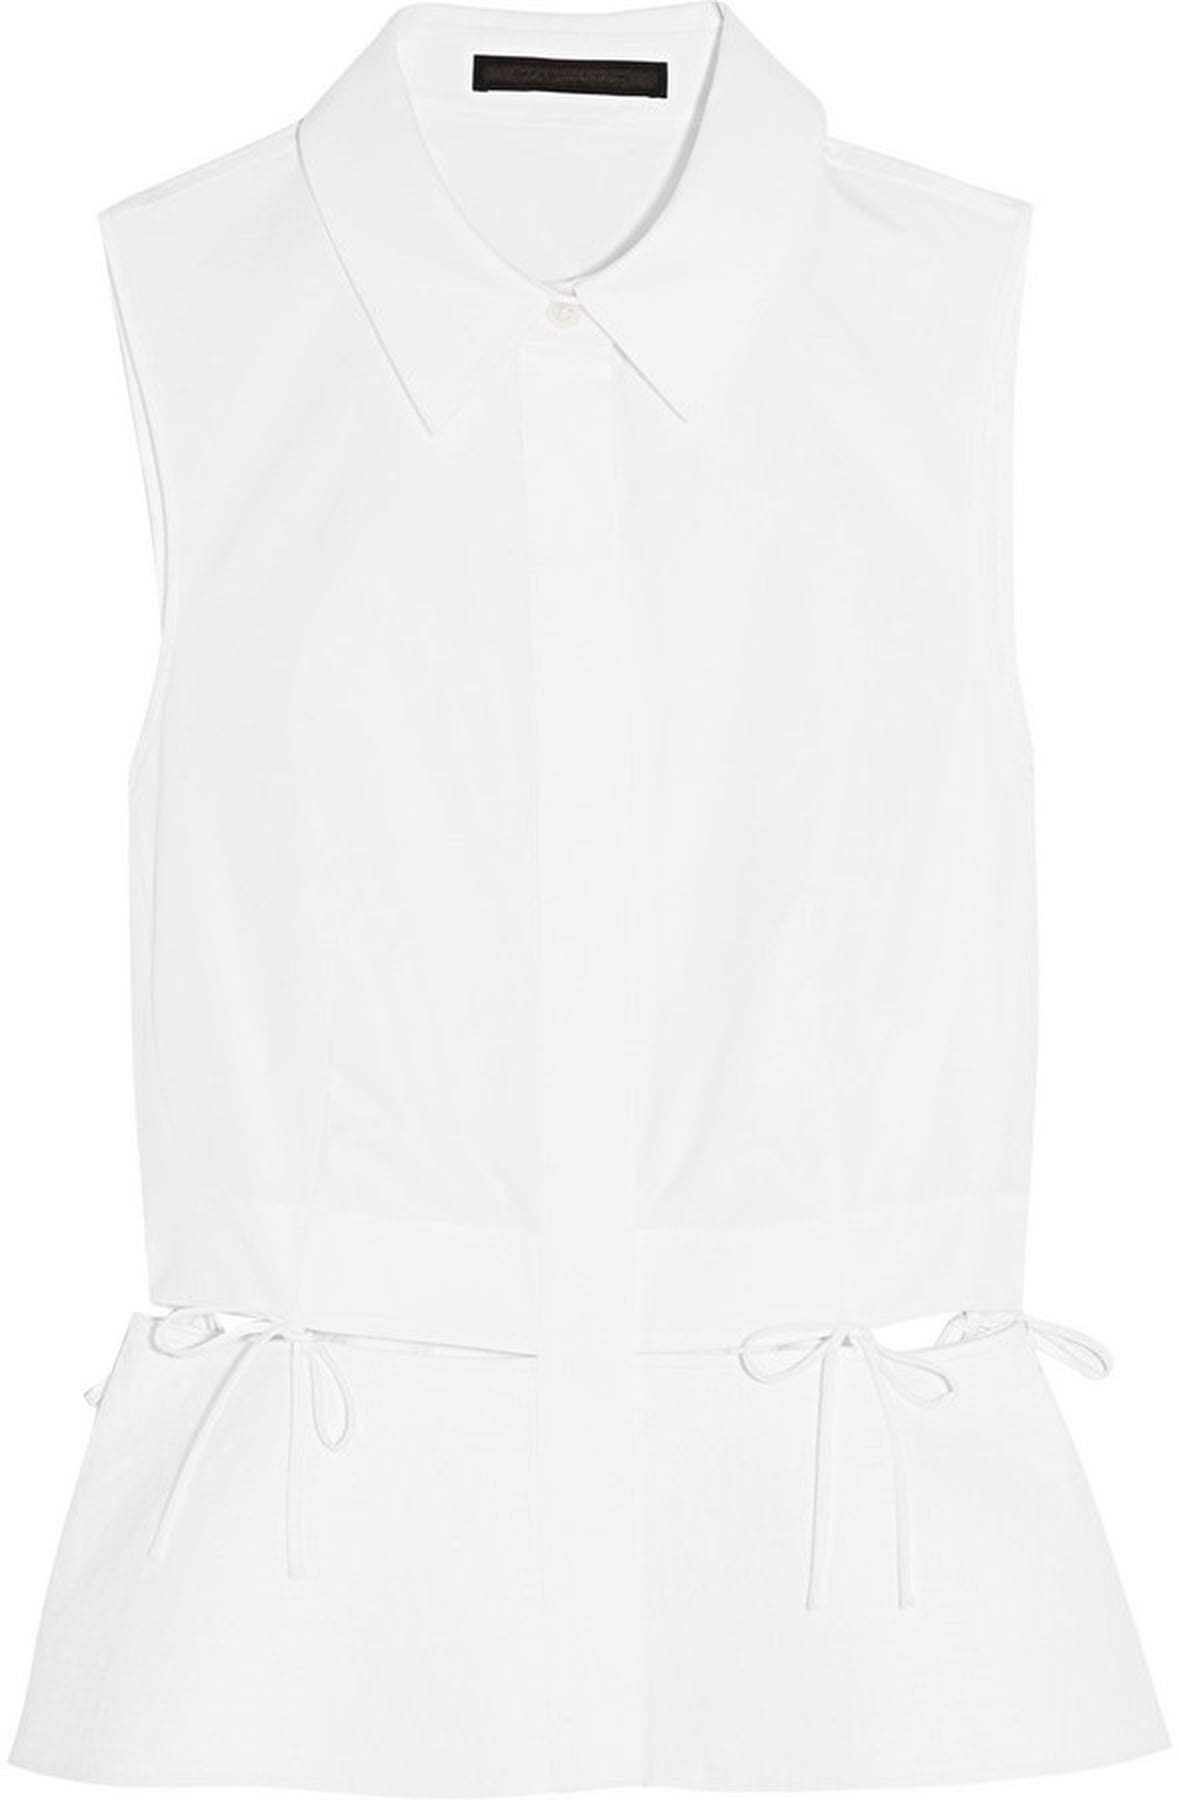 White Shirt Trend Spring 2016 | POPSUGAR Fashion